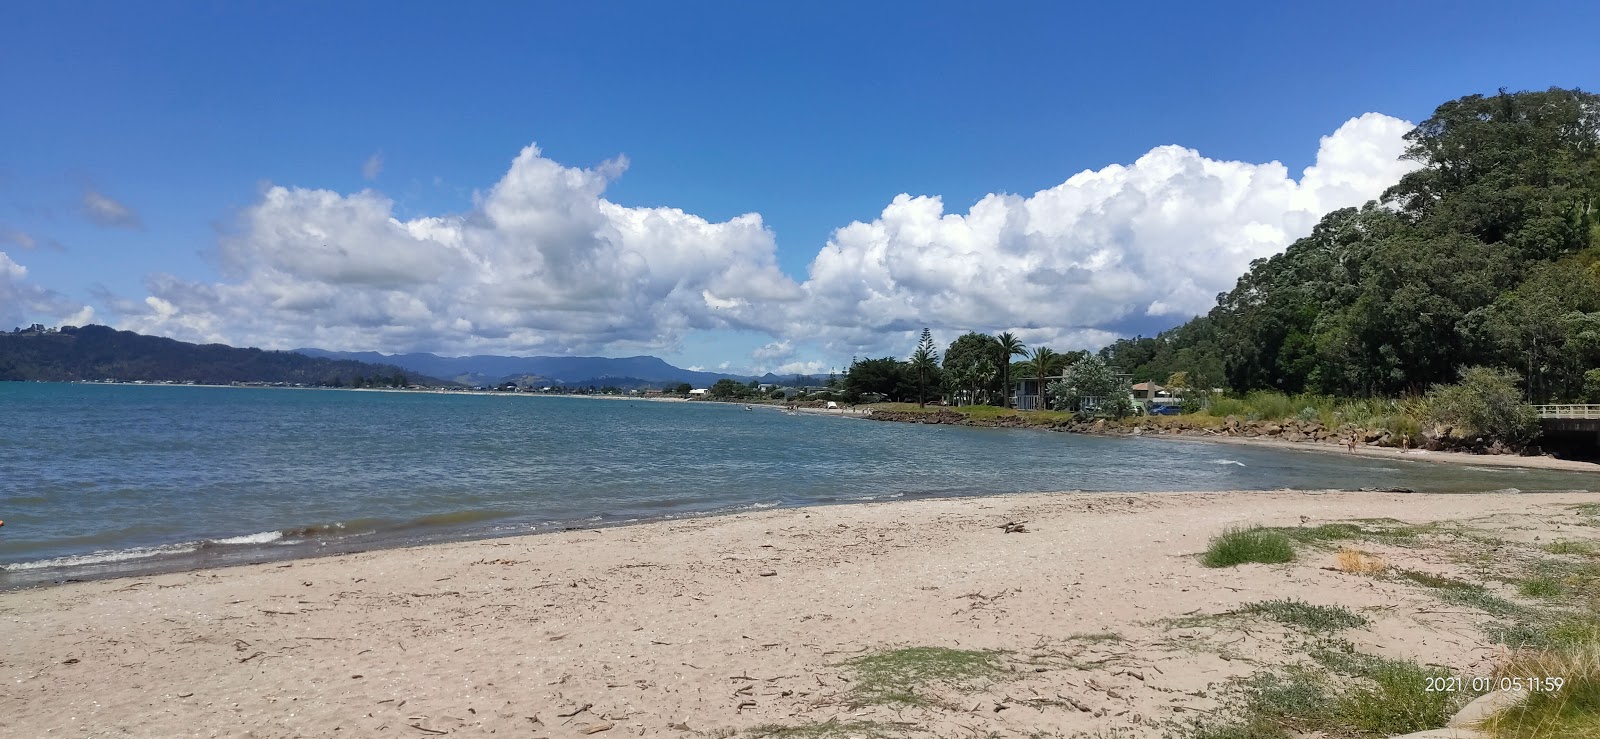 Fotografie cu Ohuka Beach - locul popular printre cunoscătorii de relaxare